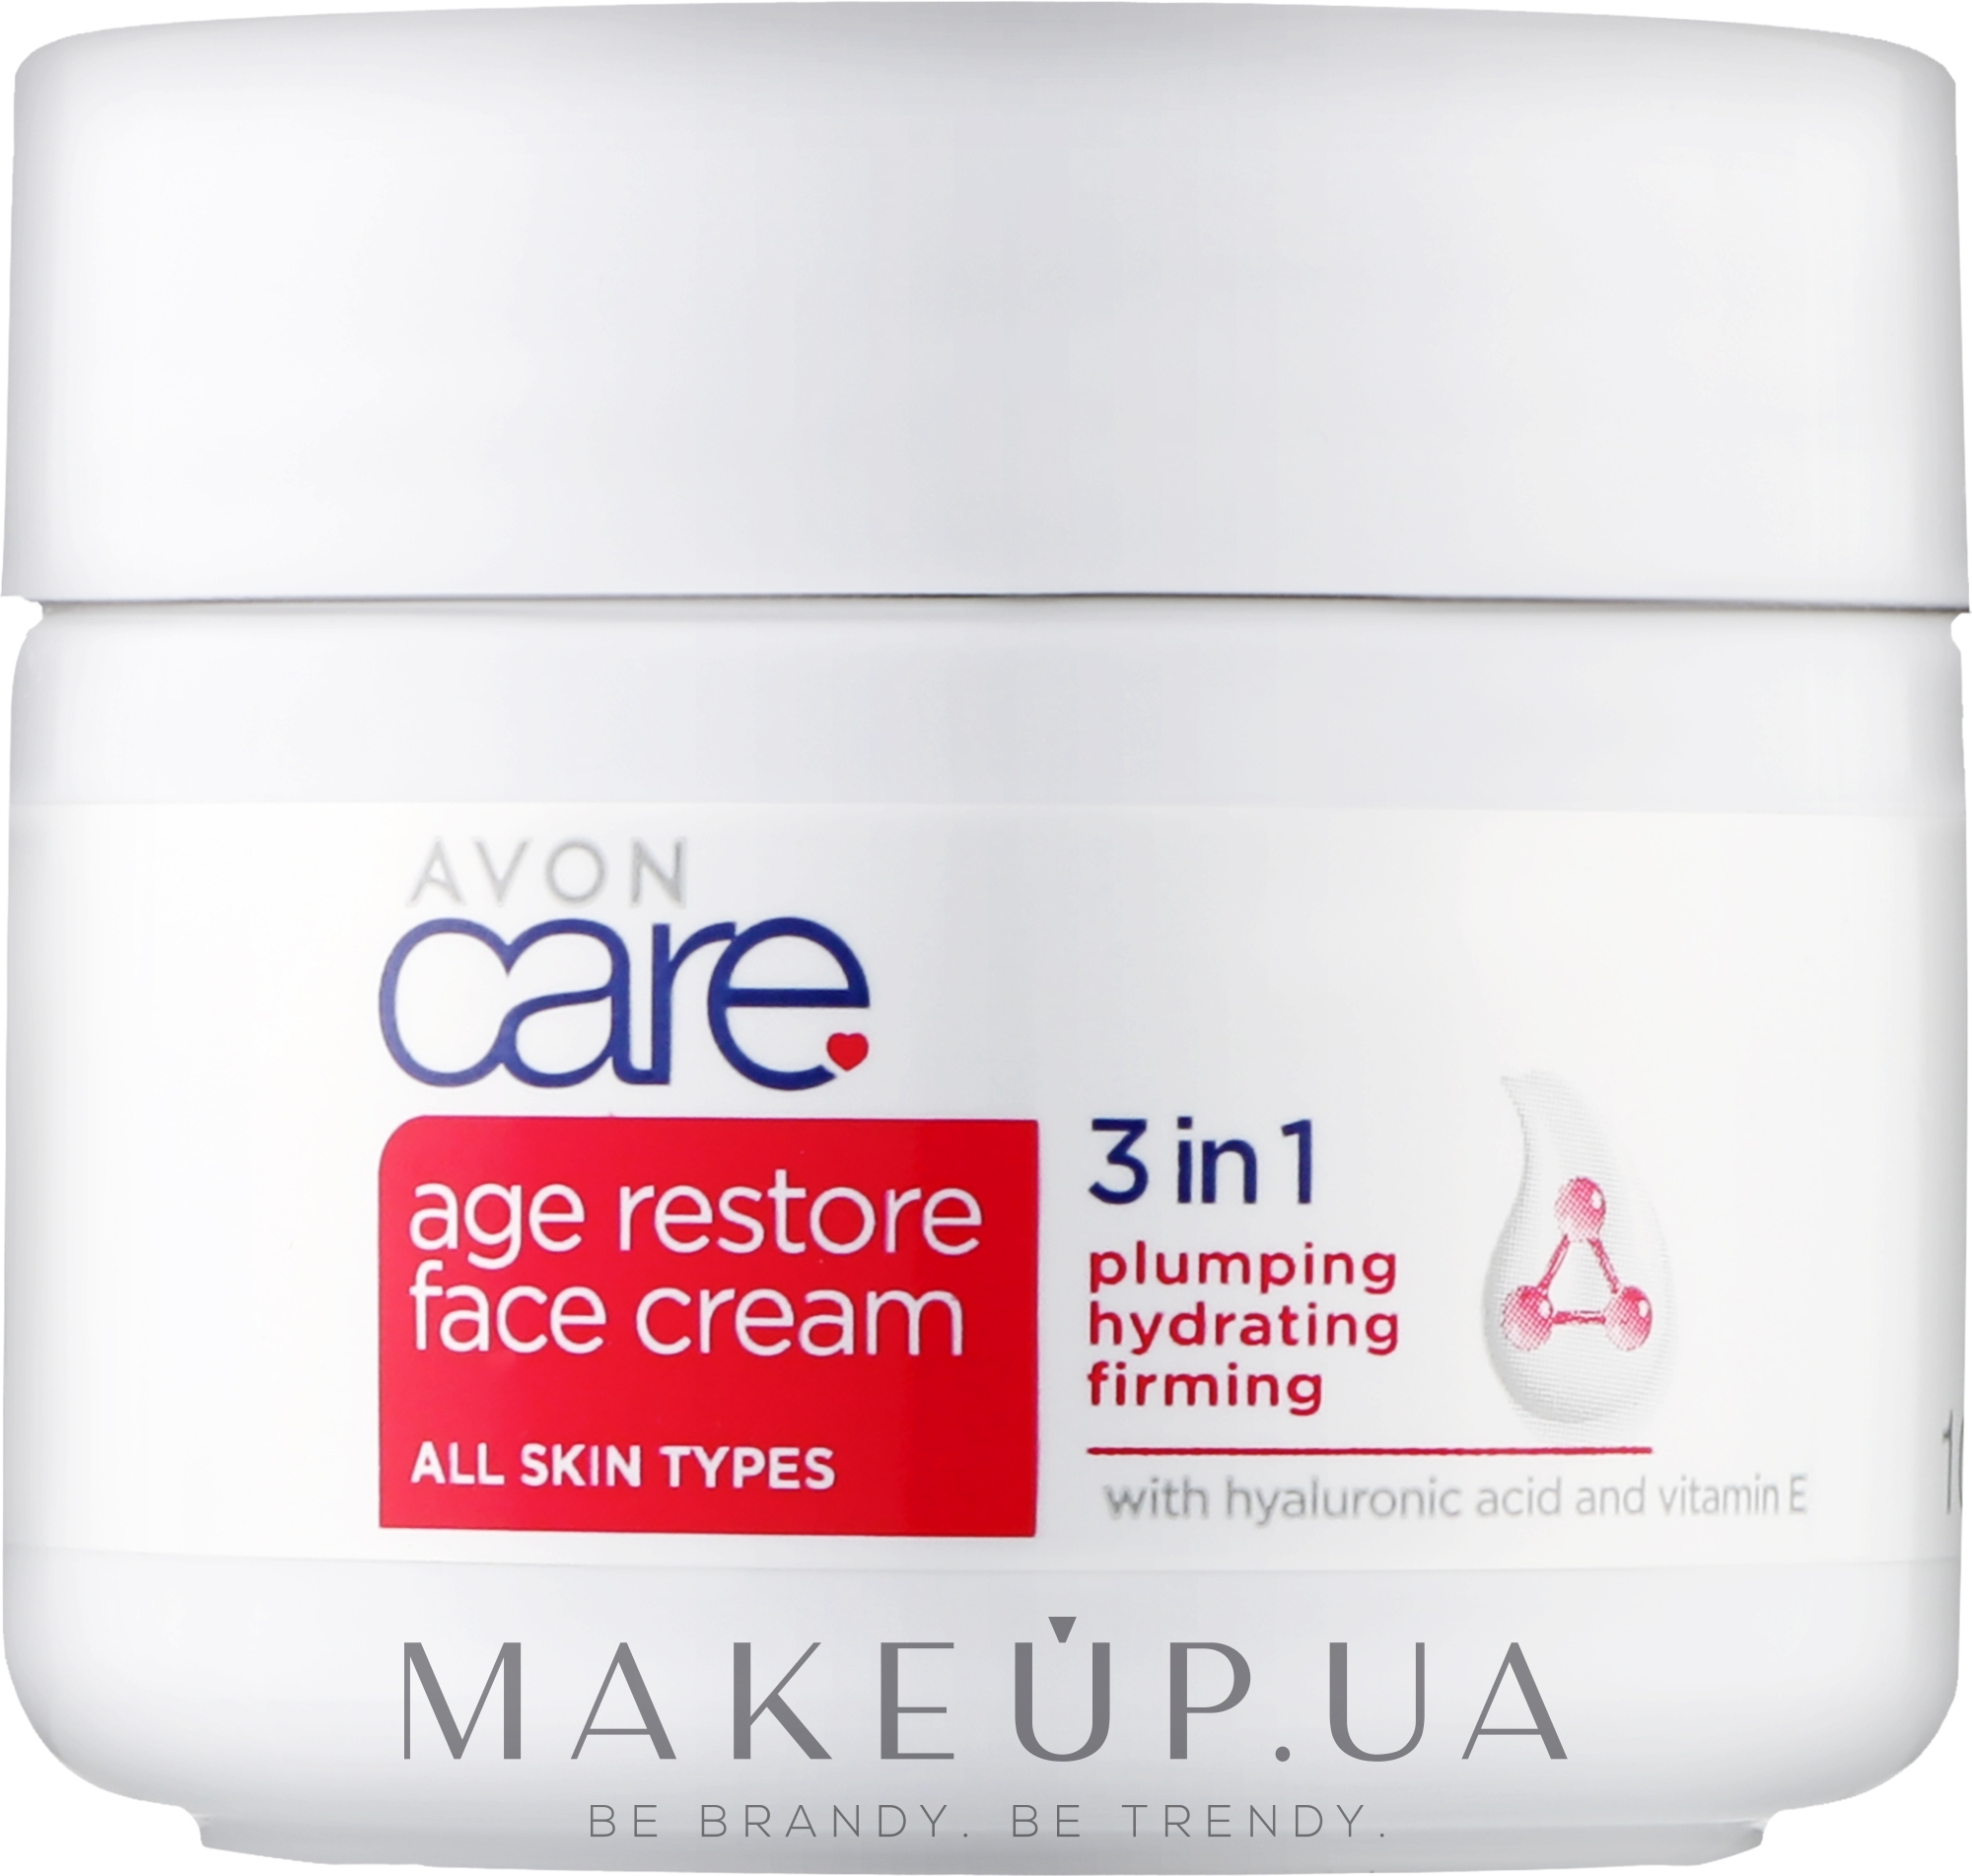 Крем против морщин 3 в 1 - Avon Care Age Restore Face Cream 3 in 1 — фото 100ml